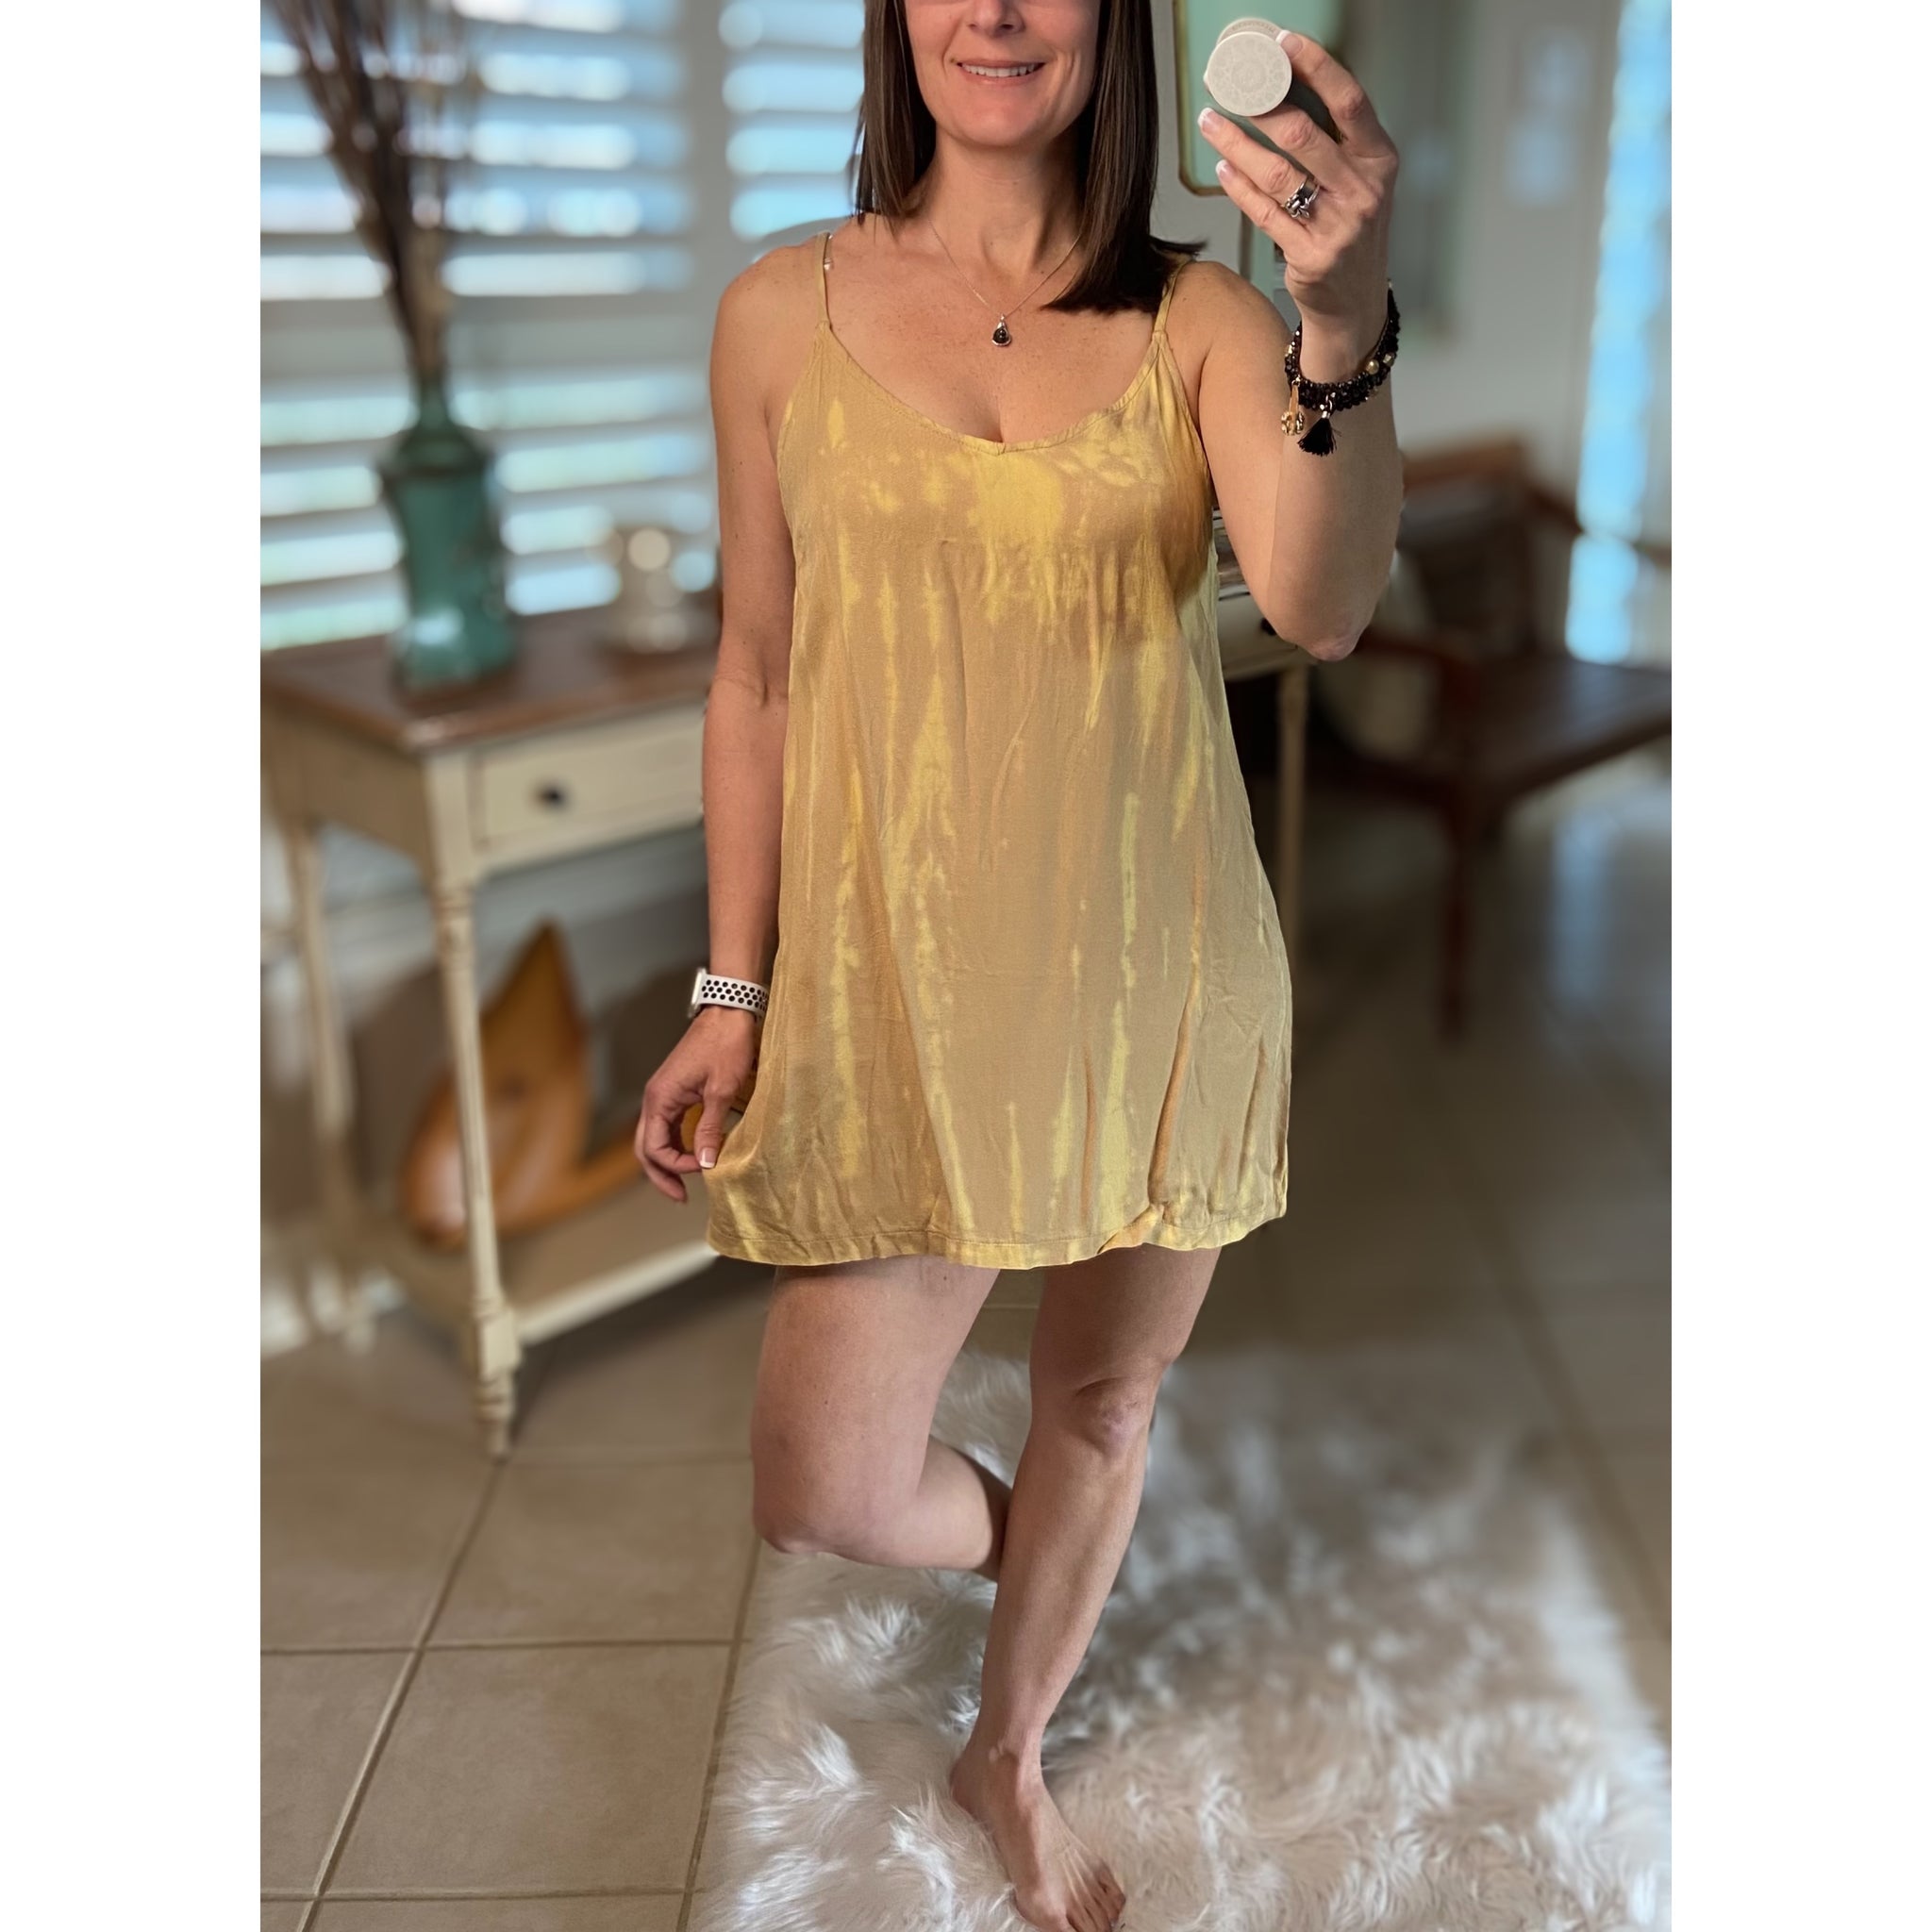 “Day at the Pool” Sexy Tie Dye Mini Dress V Neck Cami Tank Adjustable Spaghetti Strap Yellow